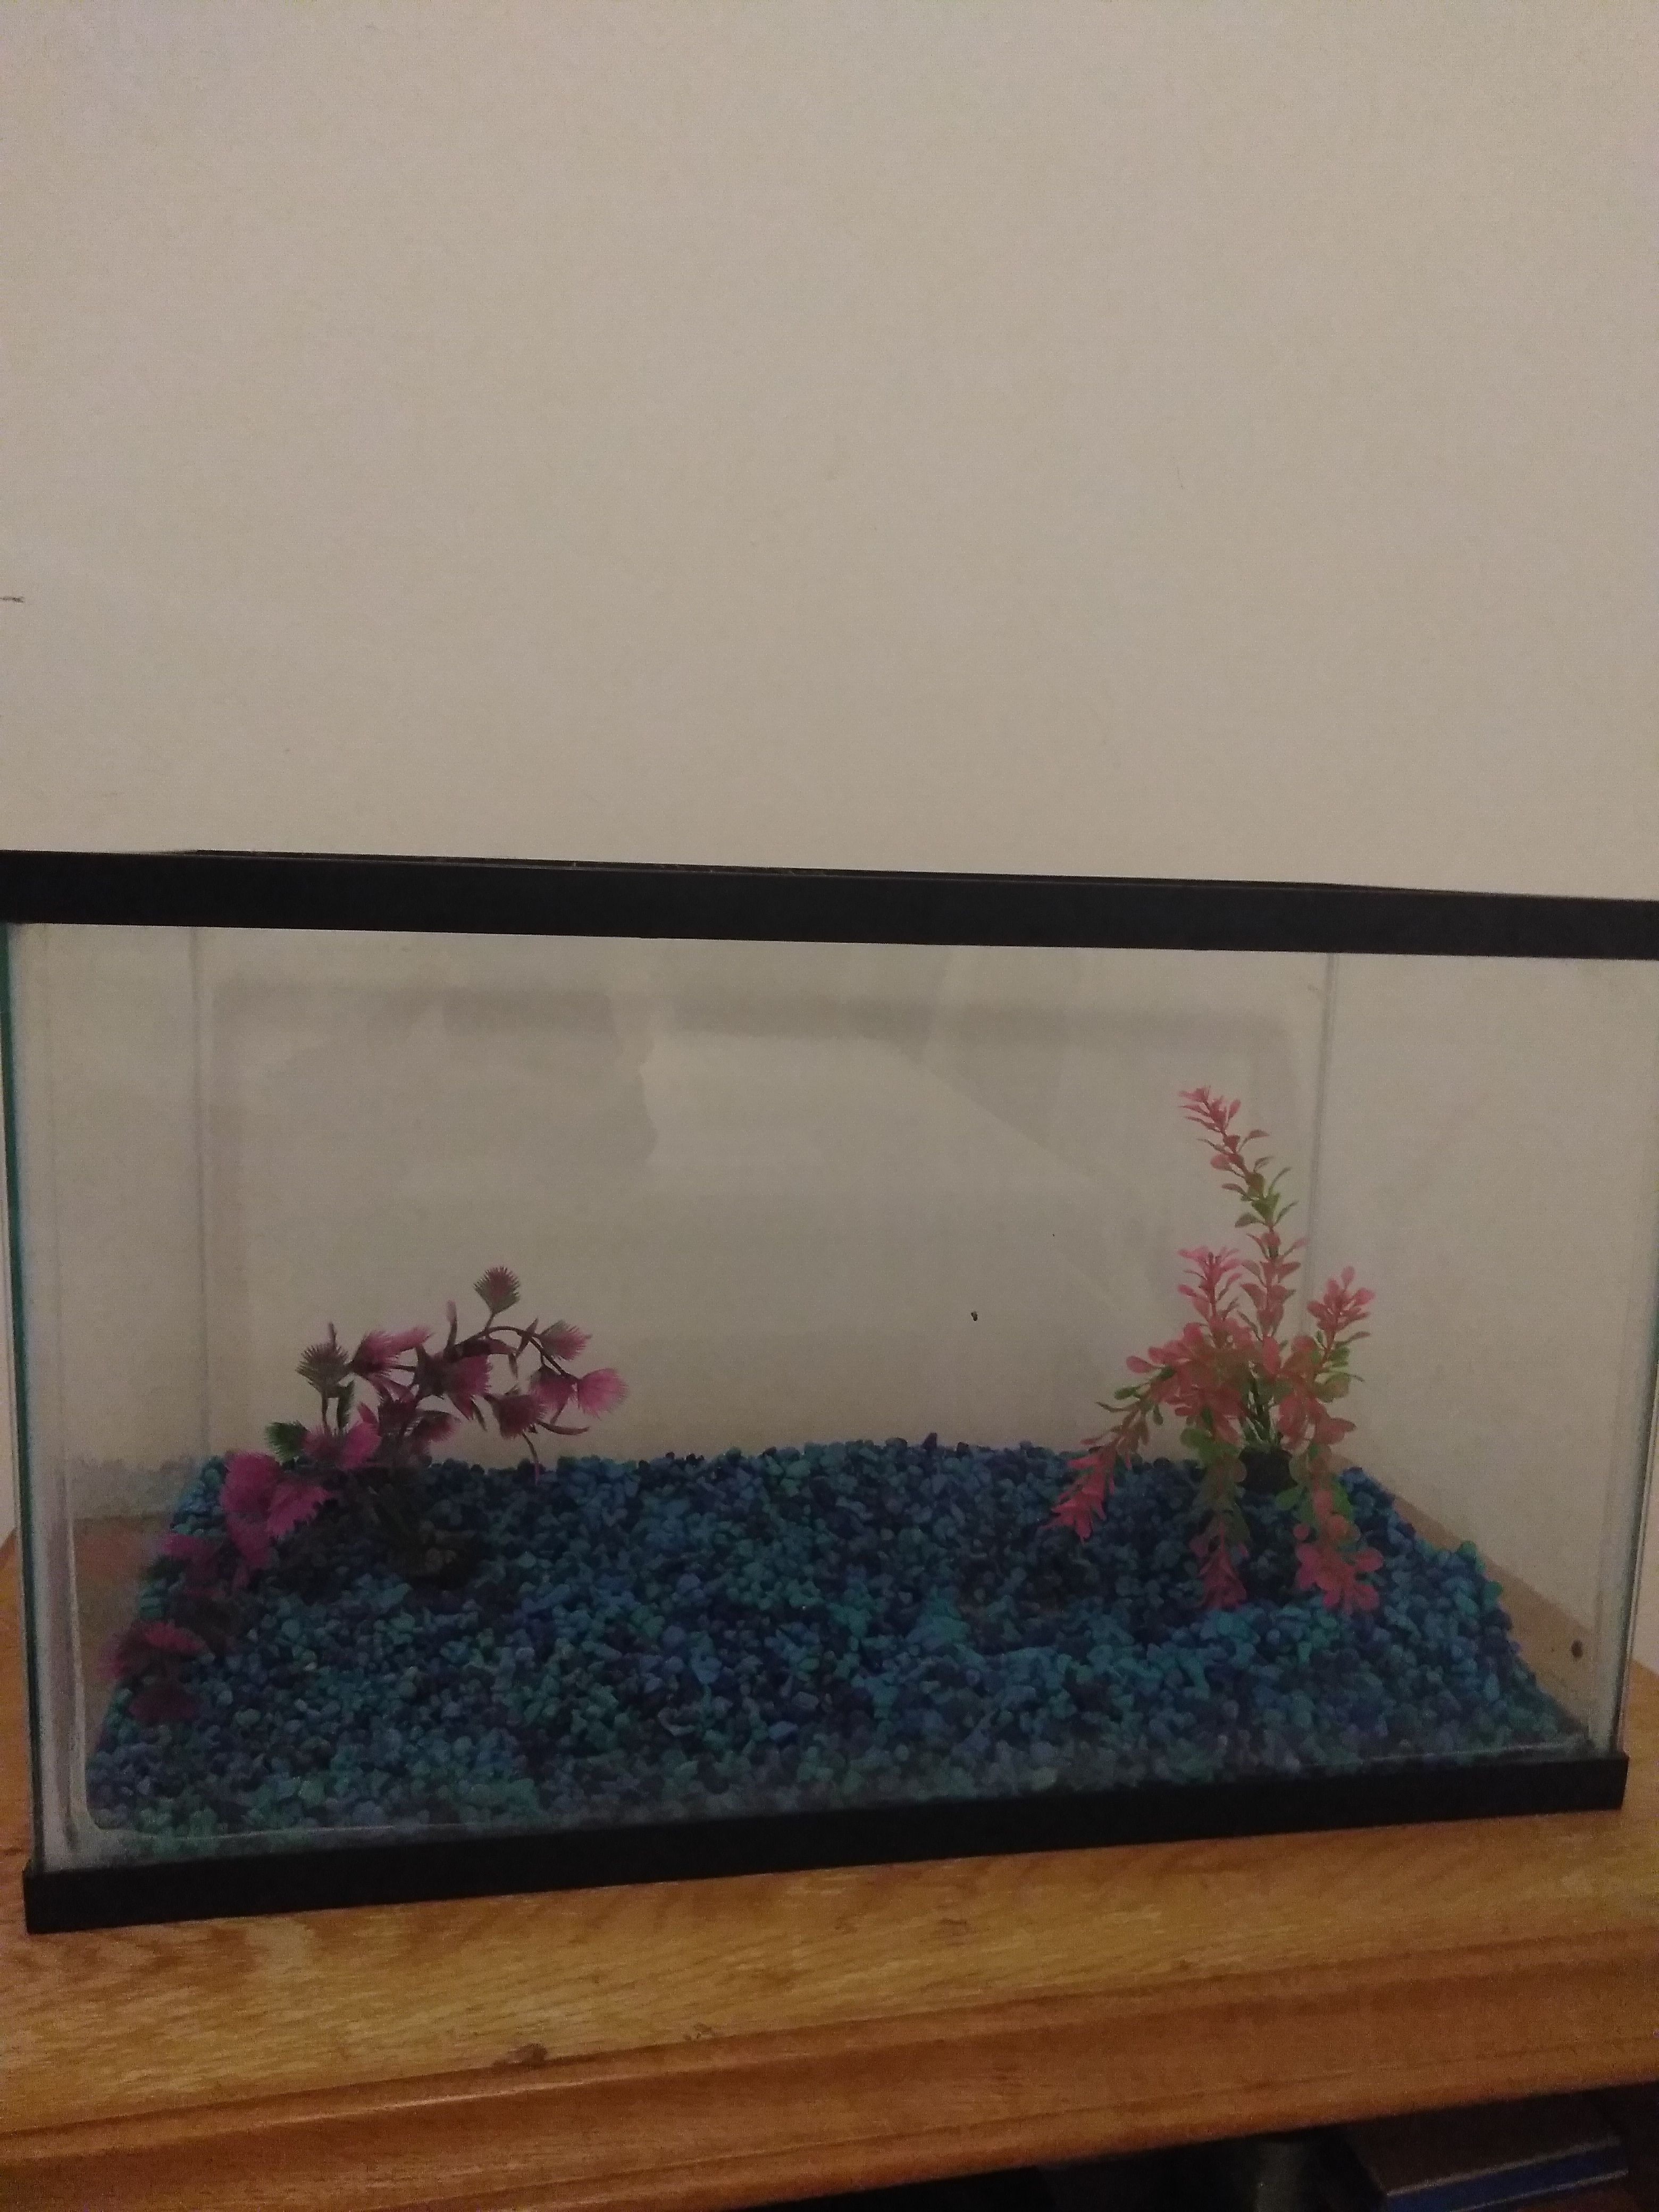 10 gallon fish tank